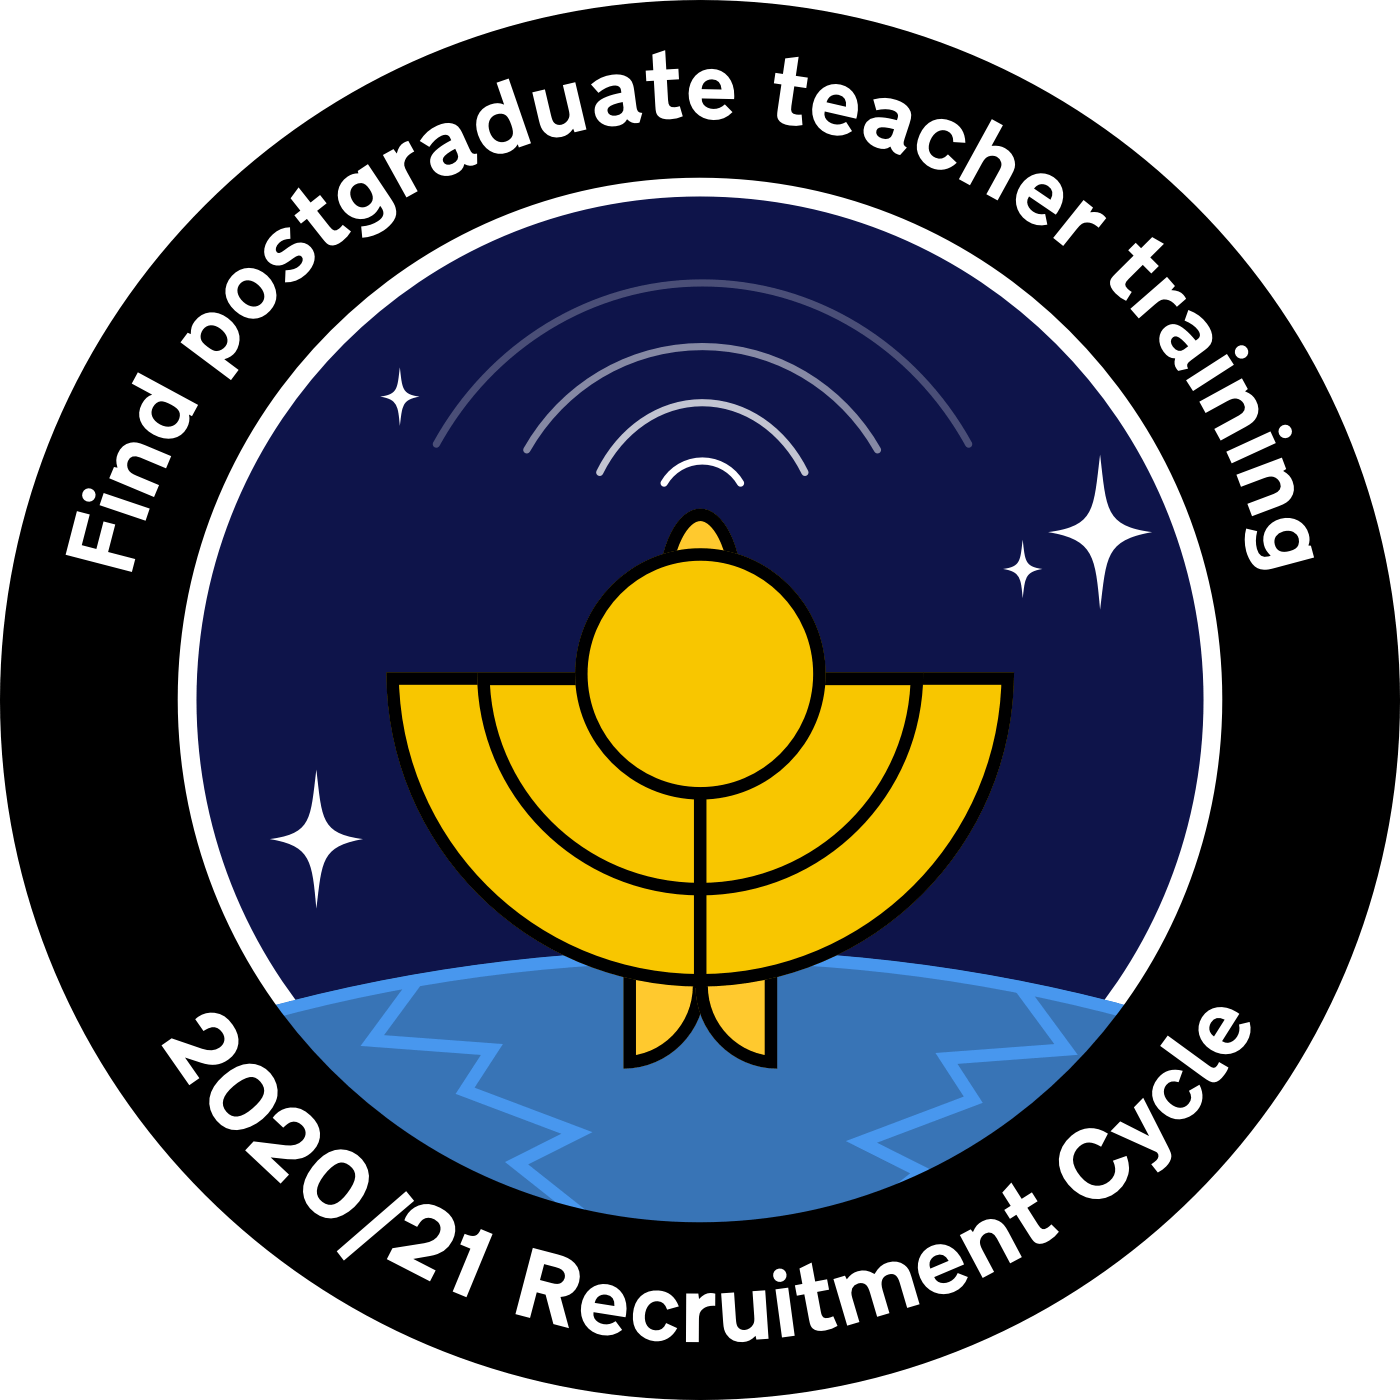 Screenshot of 2020-21 recruitment cycle